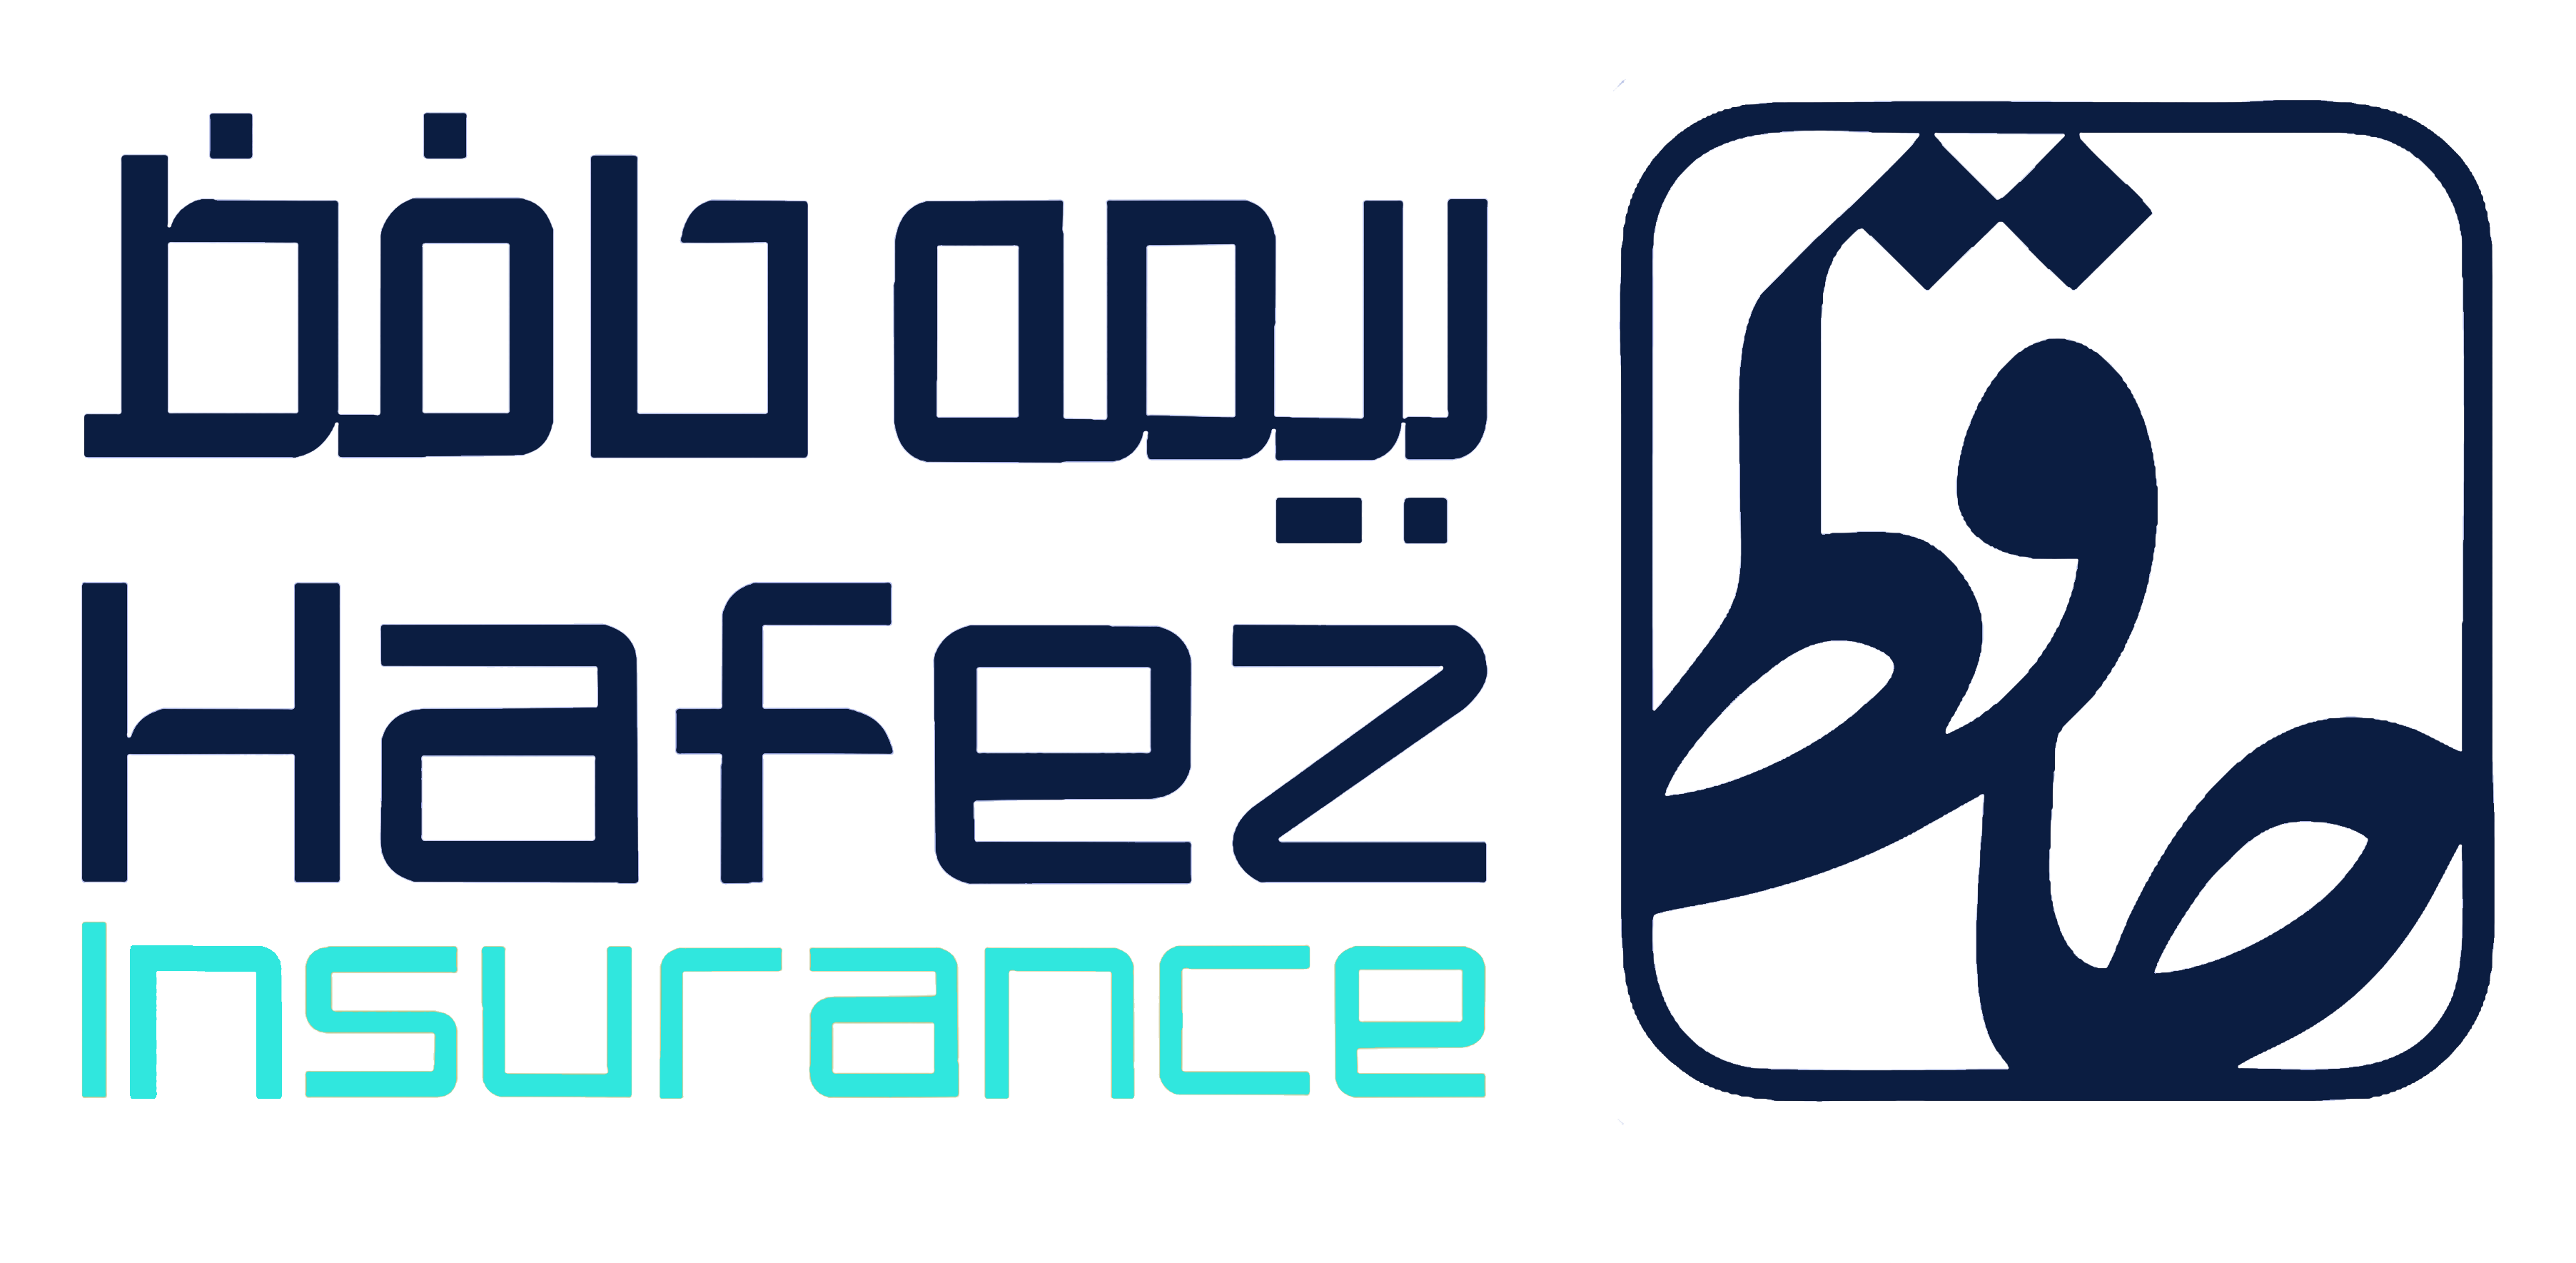 hafez insurance logo